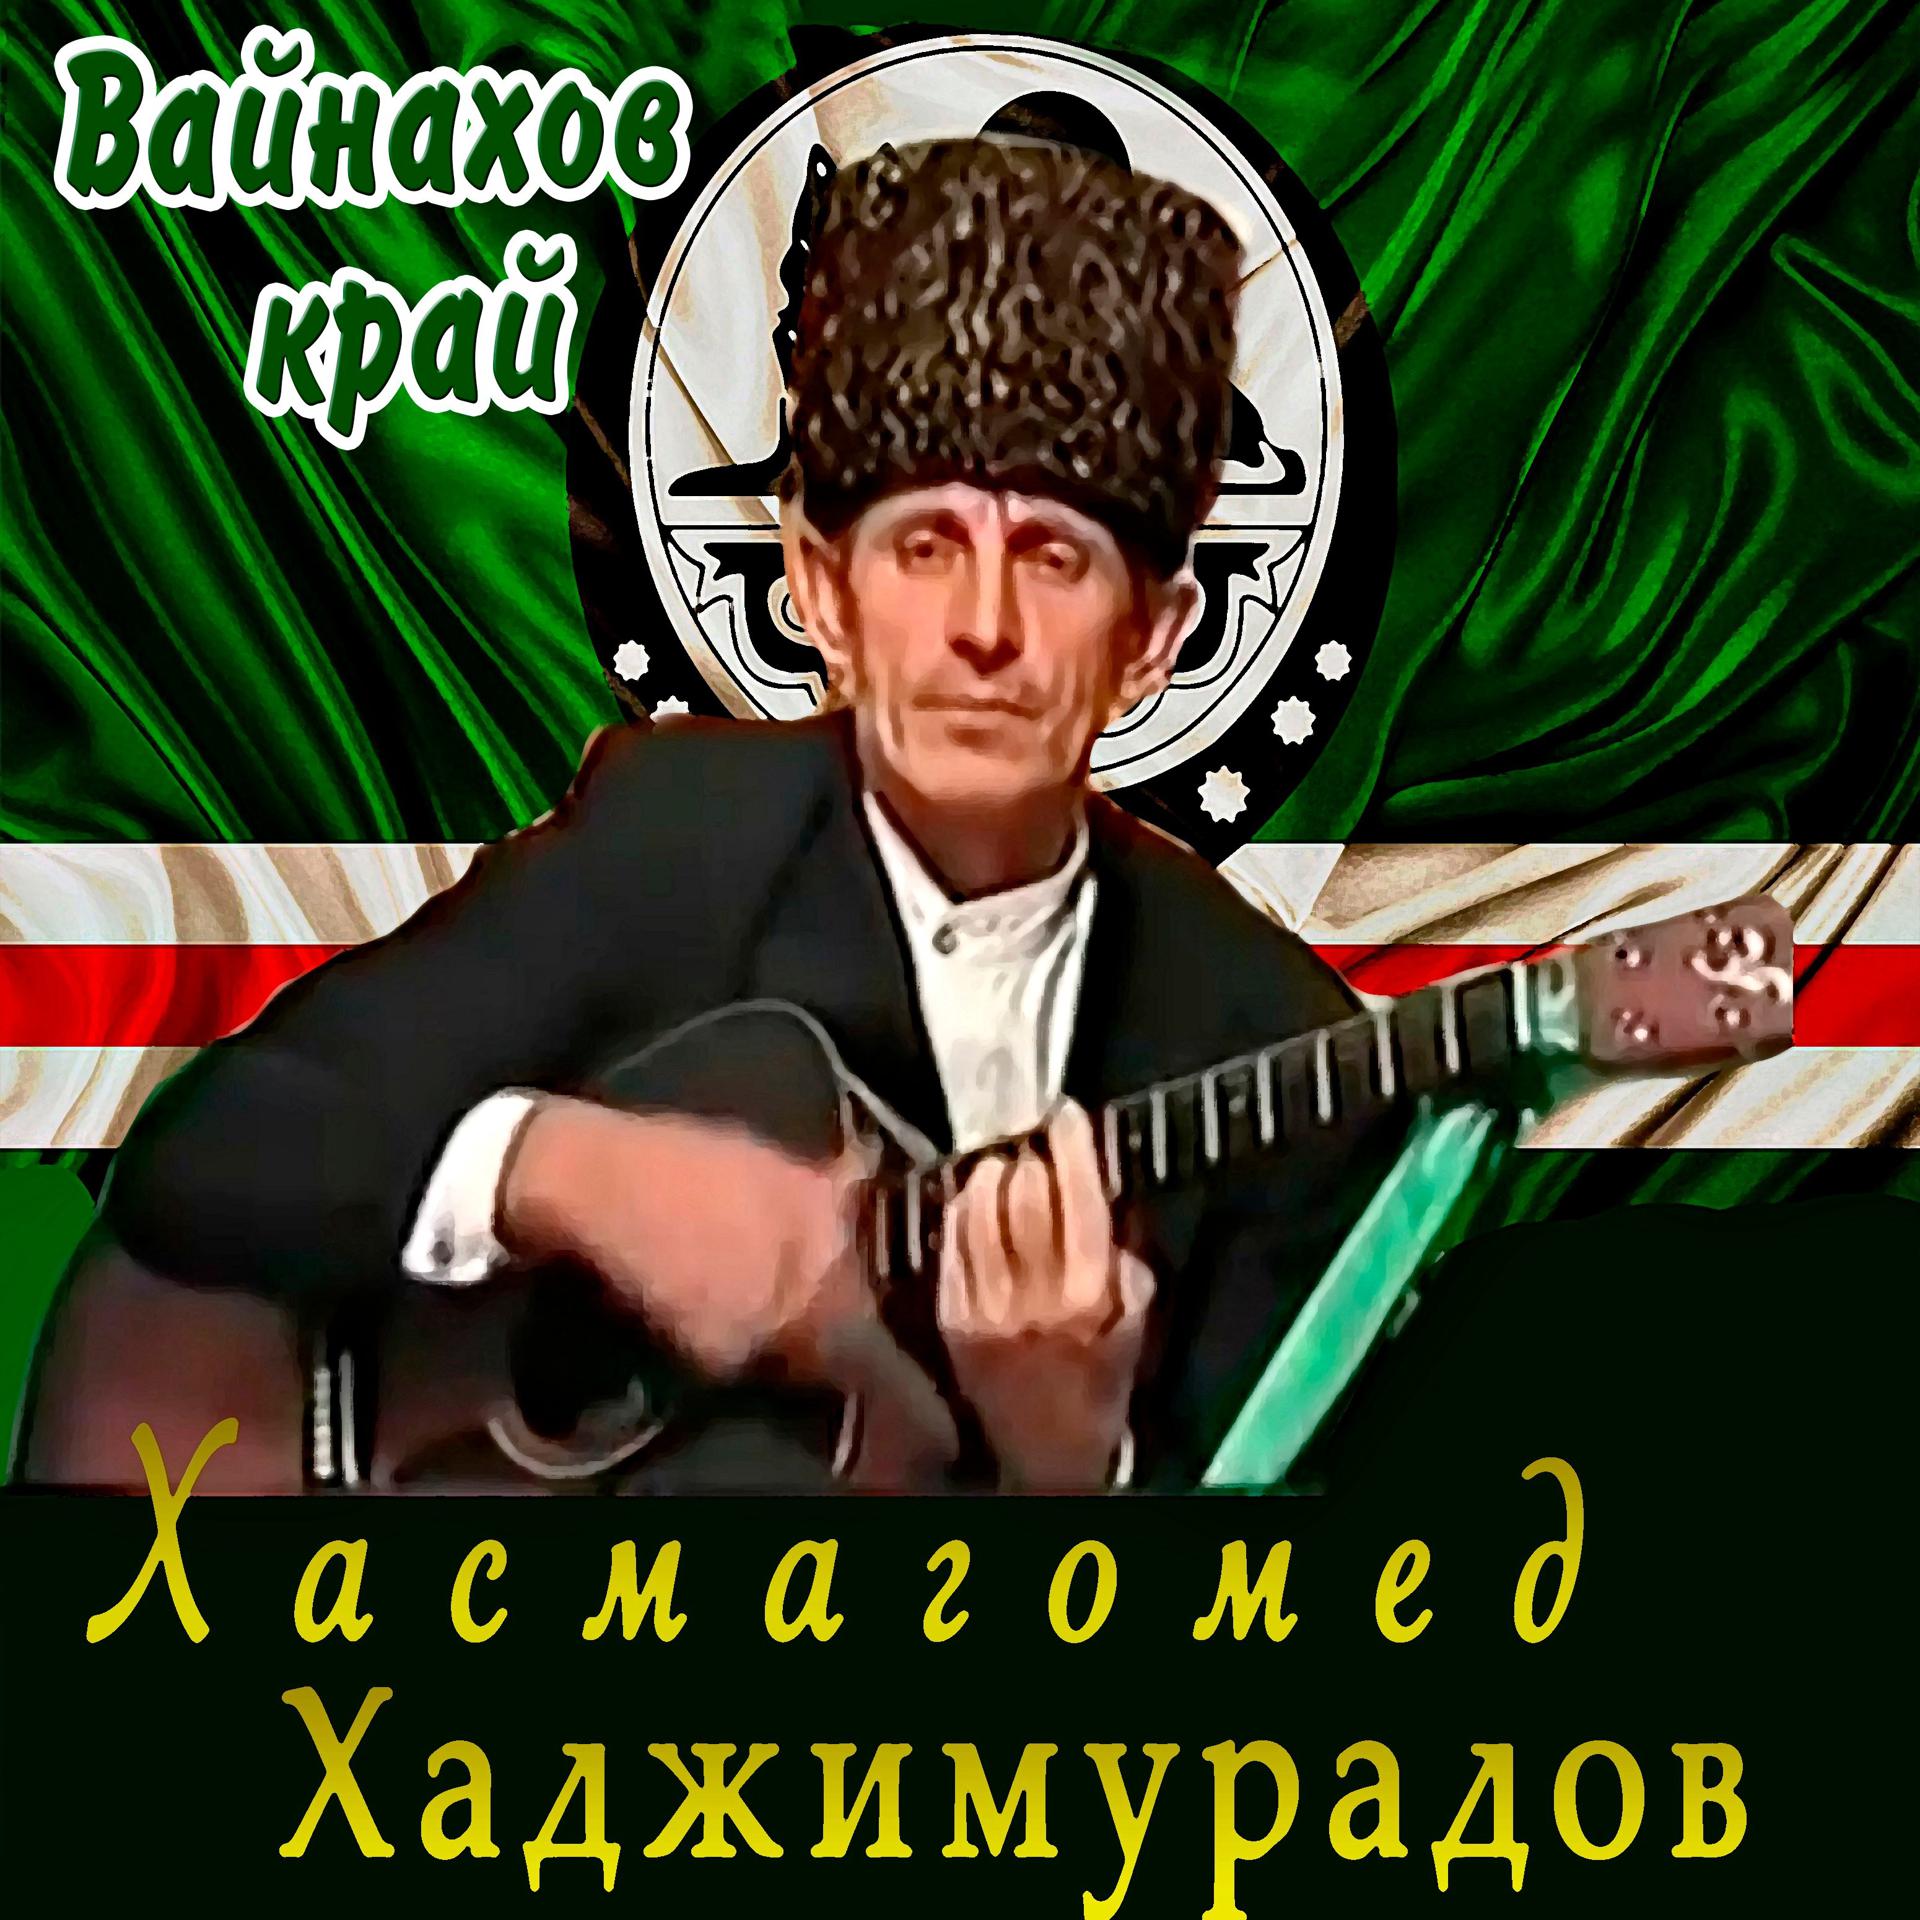 Постер альбома Вайнахов край